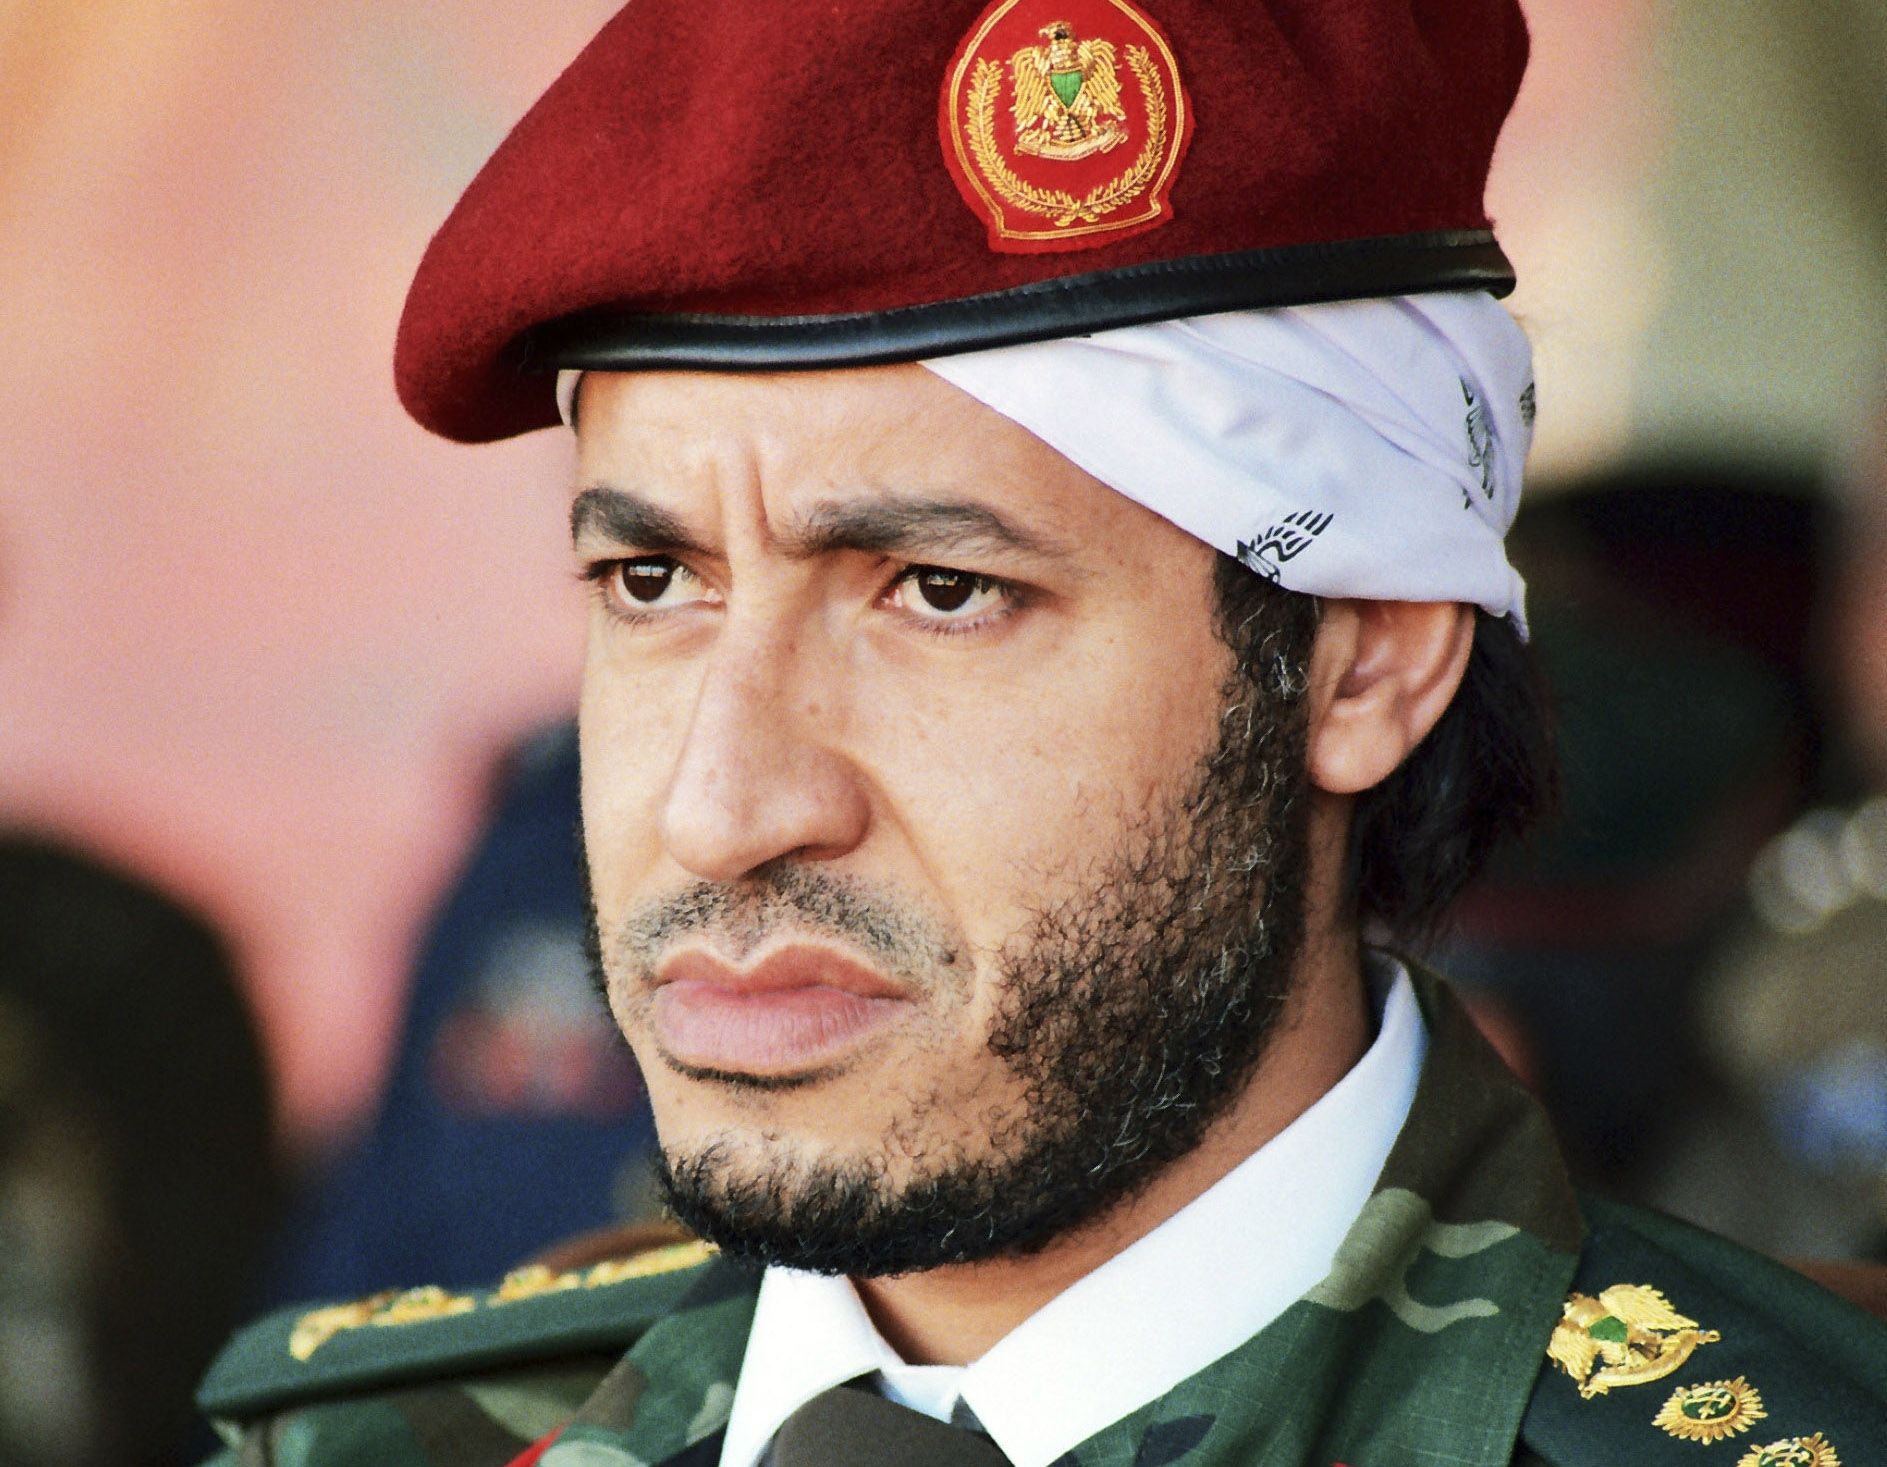 Al-Saadi Gadhafi, shown in 2011, son of late Libyan leader Moammar Gadhafi, fled to Niger in September 2011.